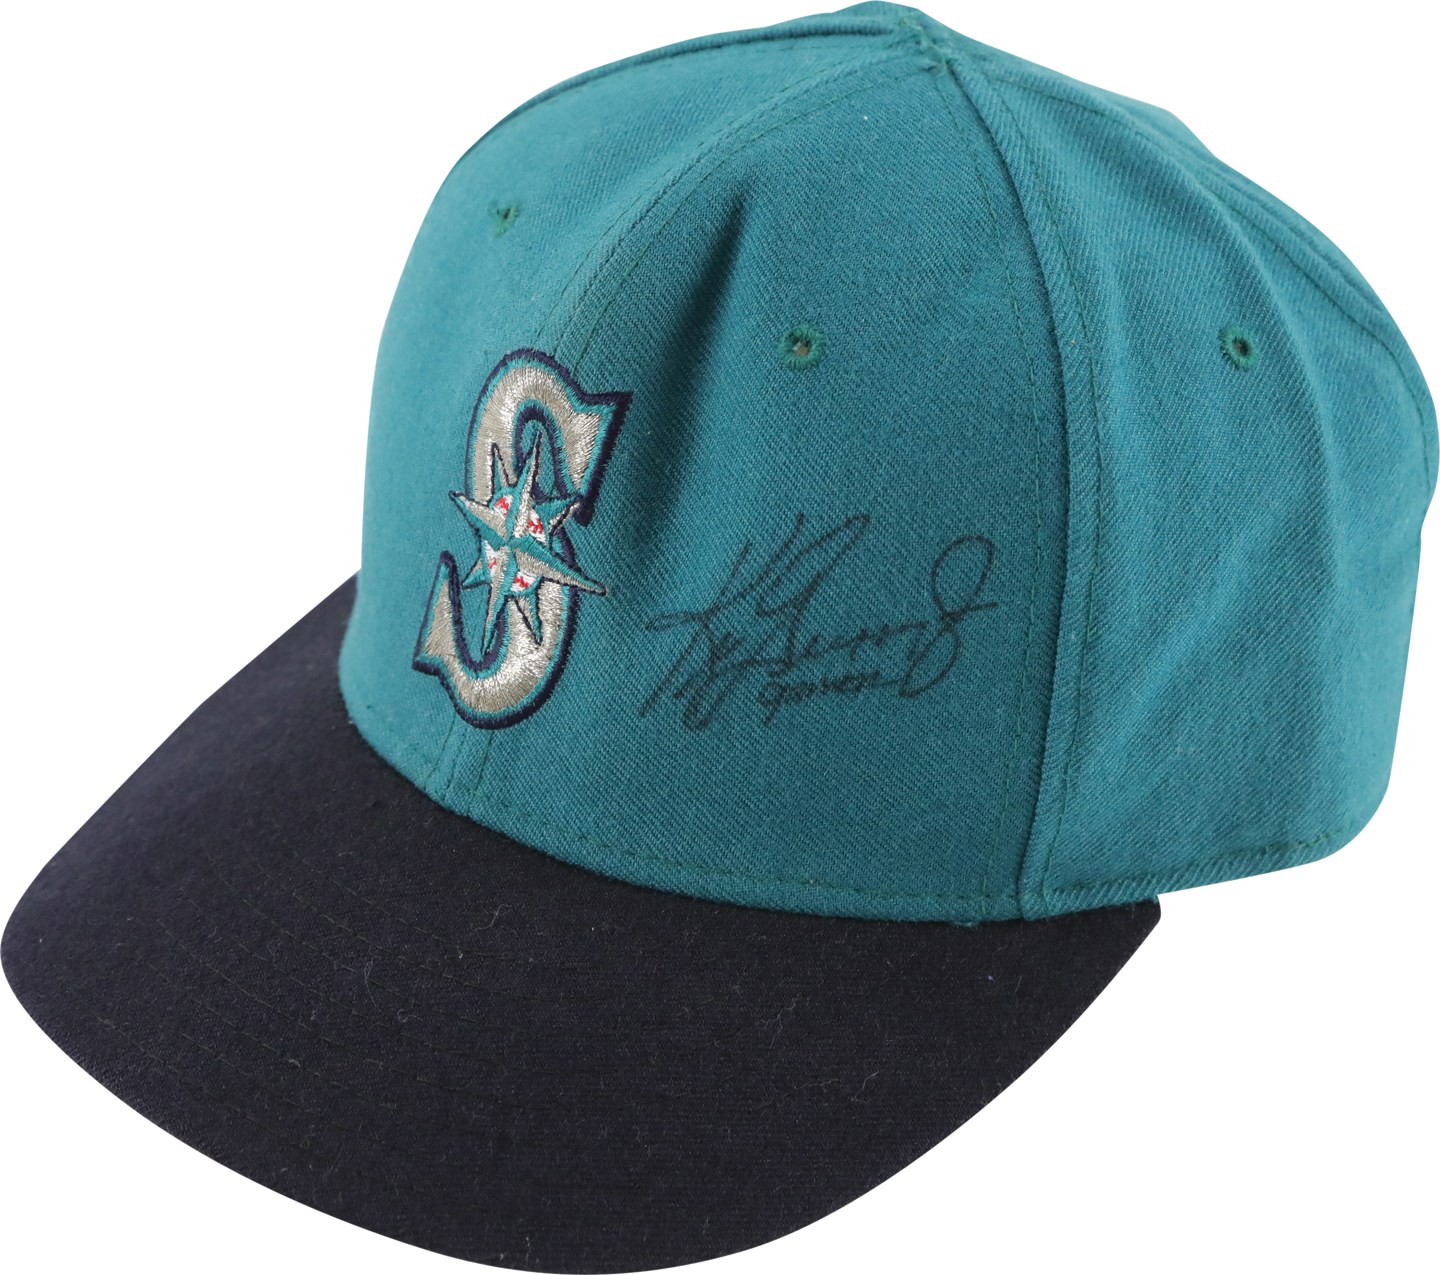 Baseball Equipment - 1990s Ken Griffey Jr. Seattle Mariners Signed Game Worn Hat (Beckett)